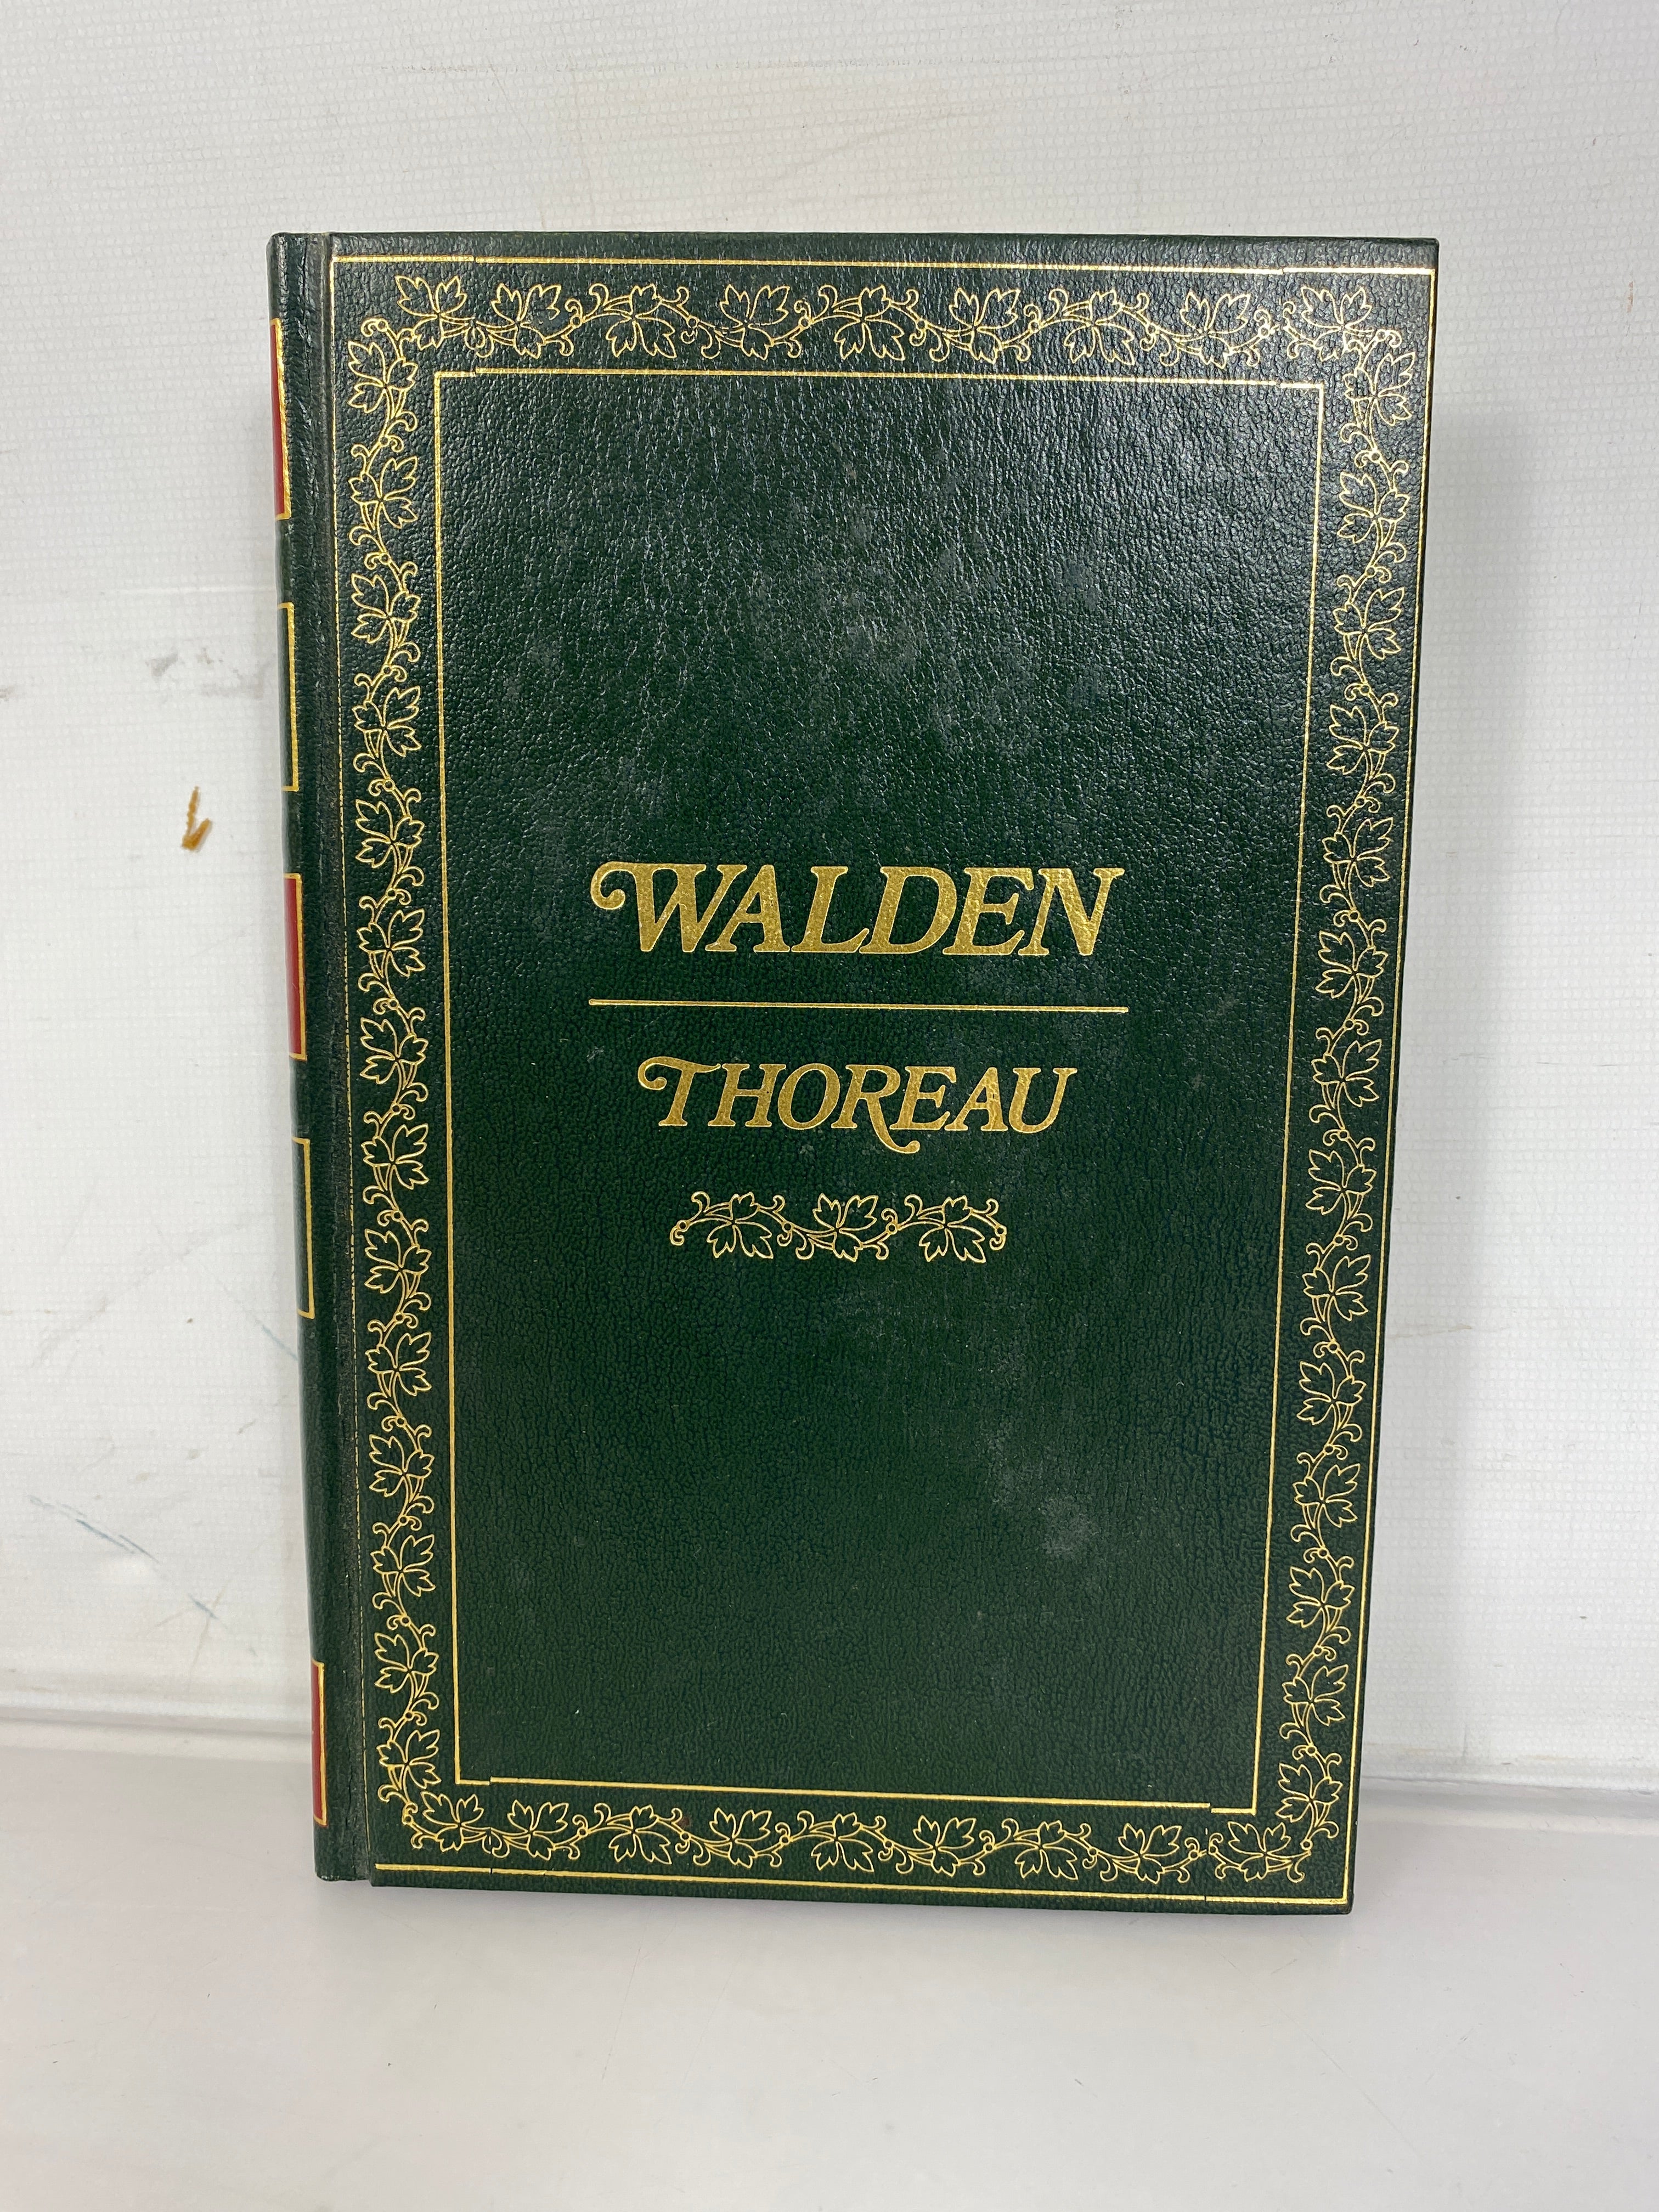 Walden Henry David Thoreau 1976 Longriver Press HC